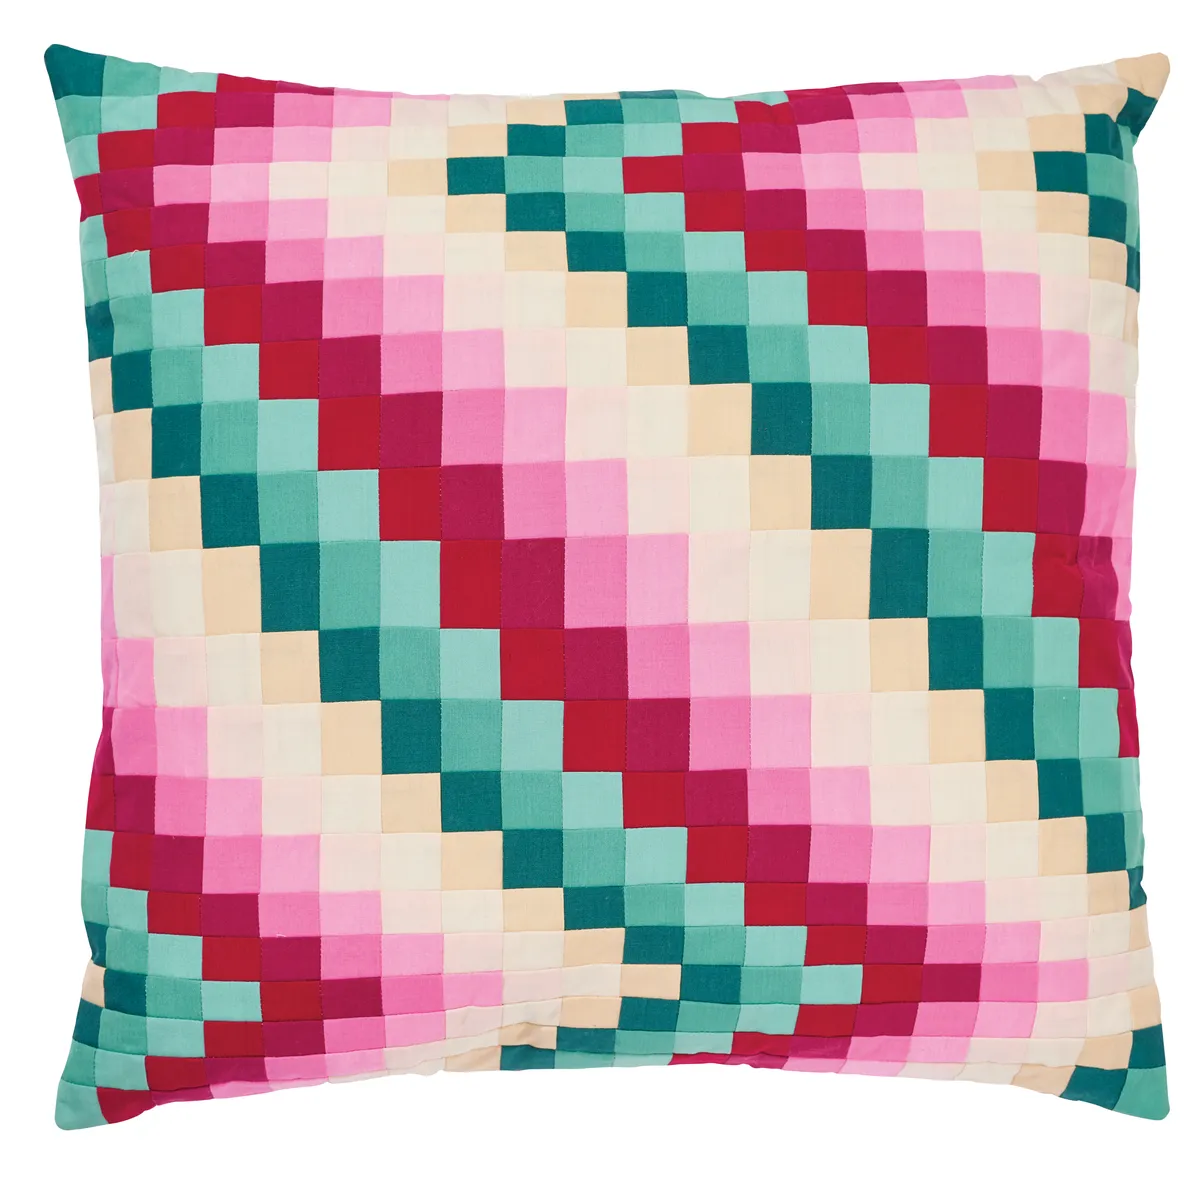 Bargello patchwork cushion tutorial